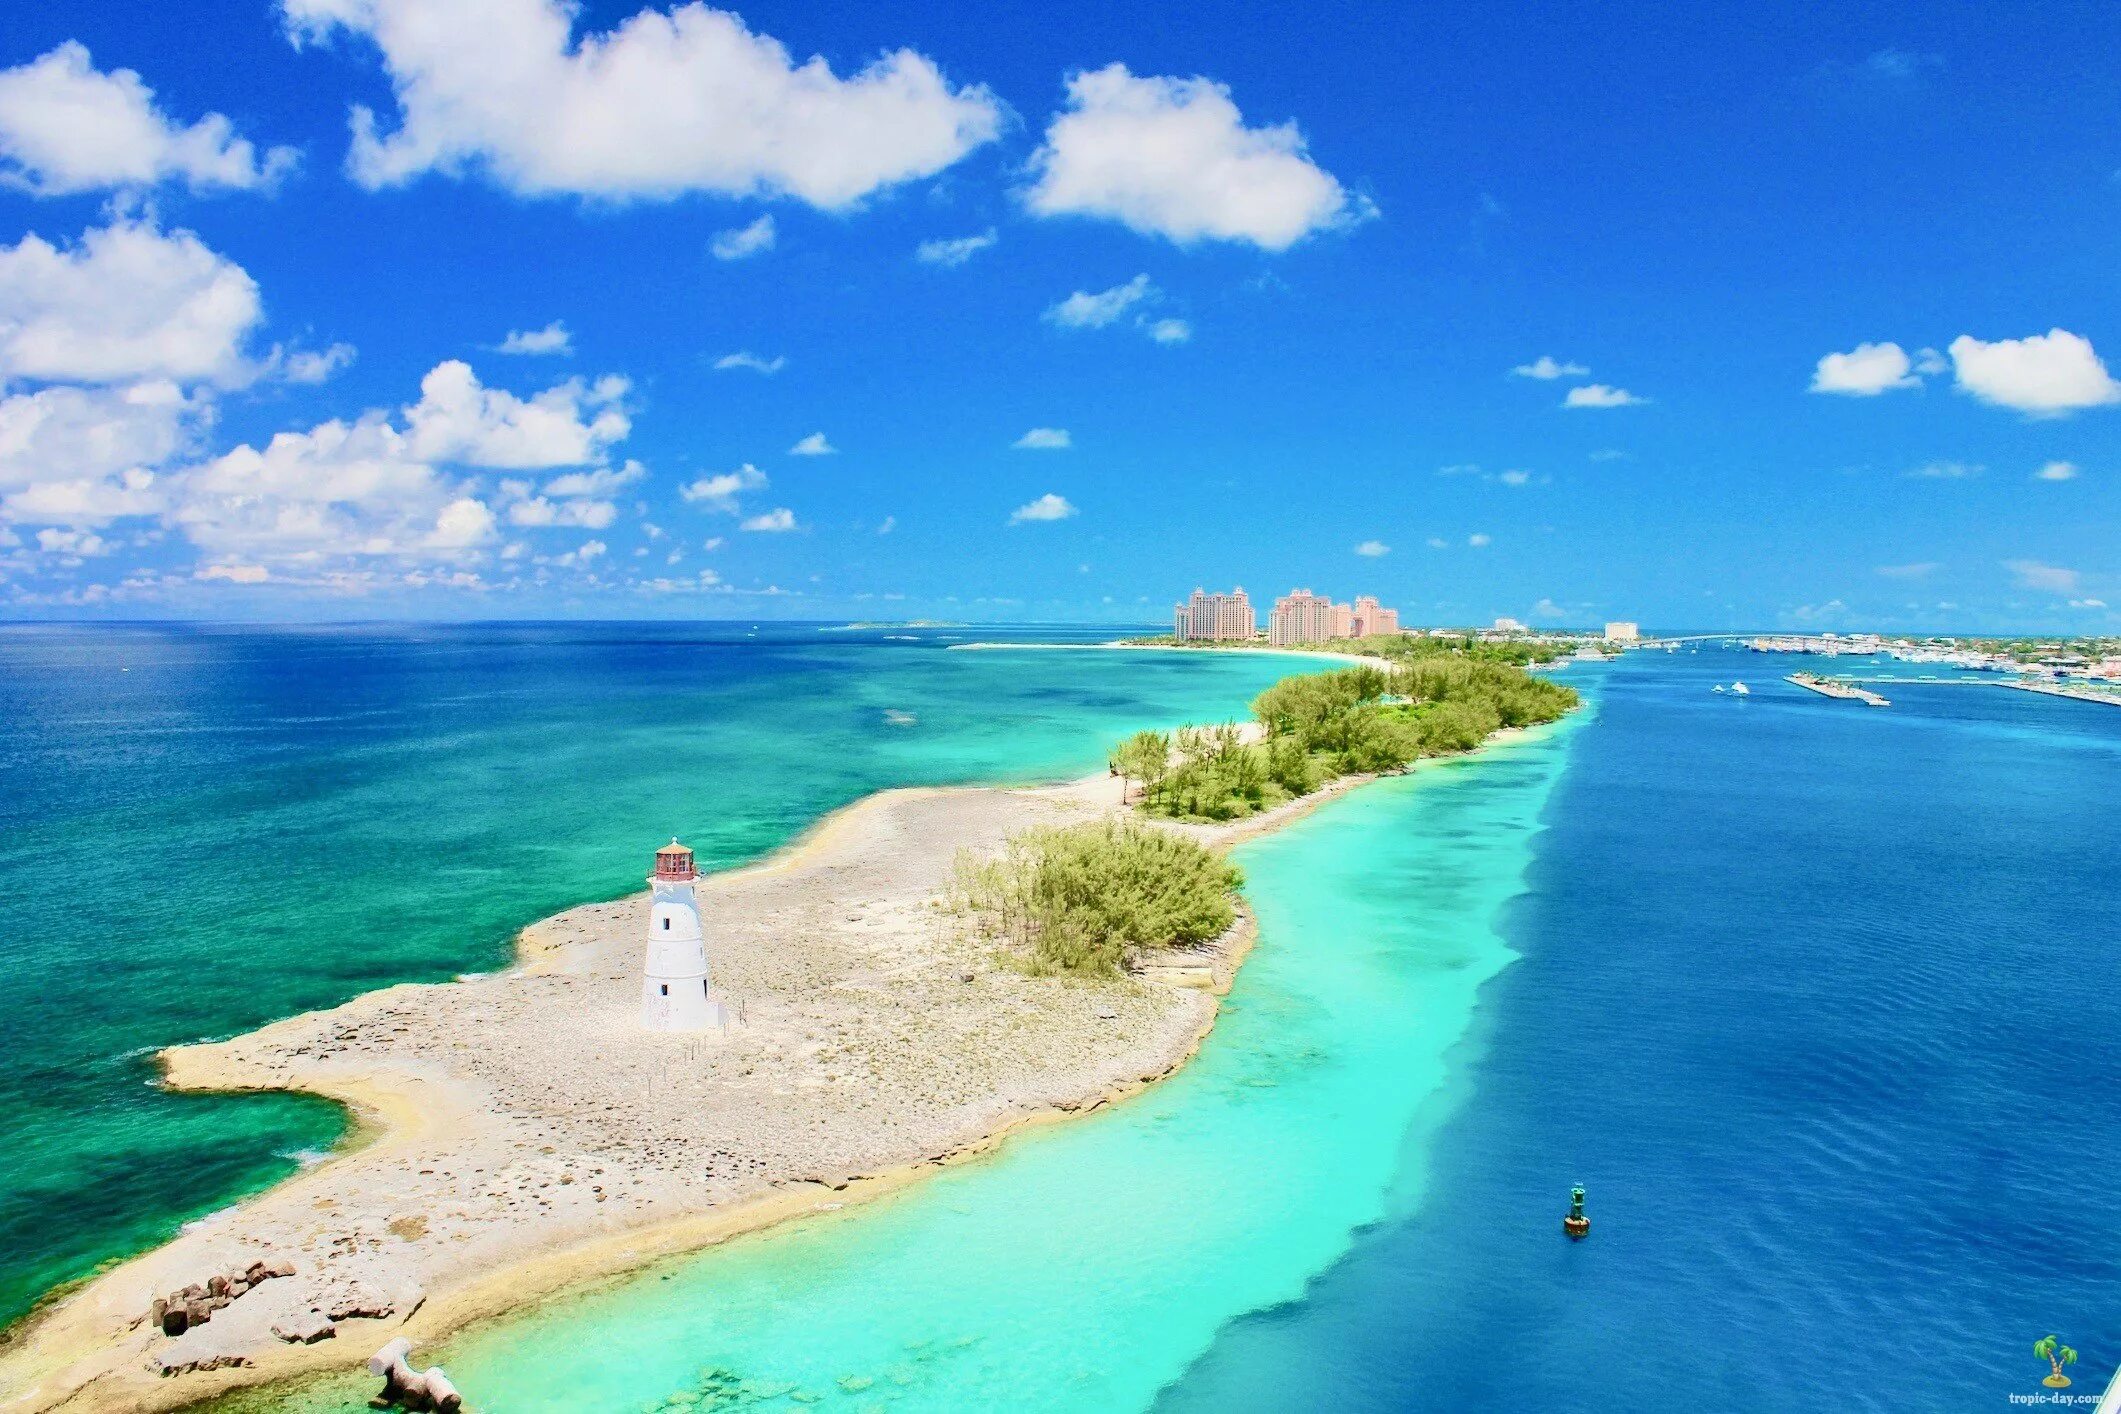 Bahamas islands. Остров Парадайз Багамские острова. Багамы Нассау. Багамские острова Атлантис. Парадайз Айленд Багамы.